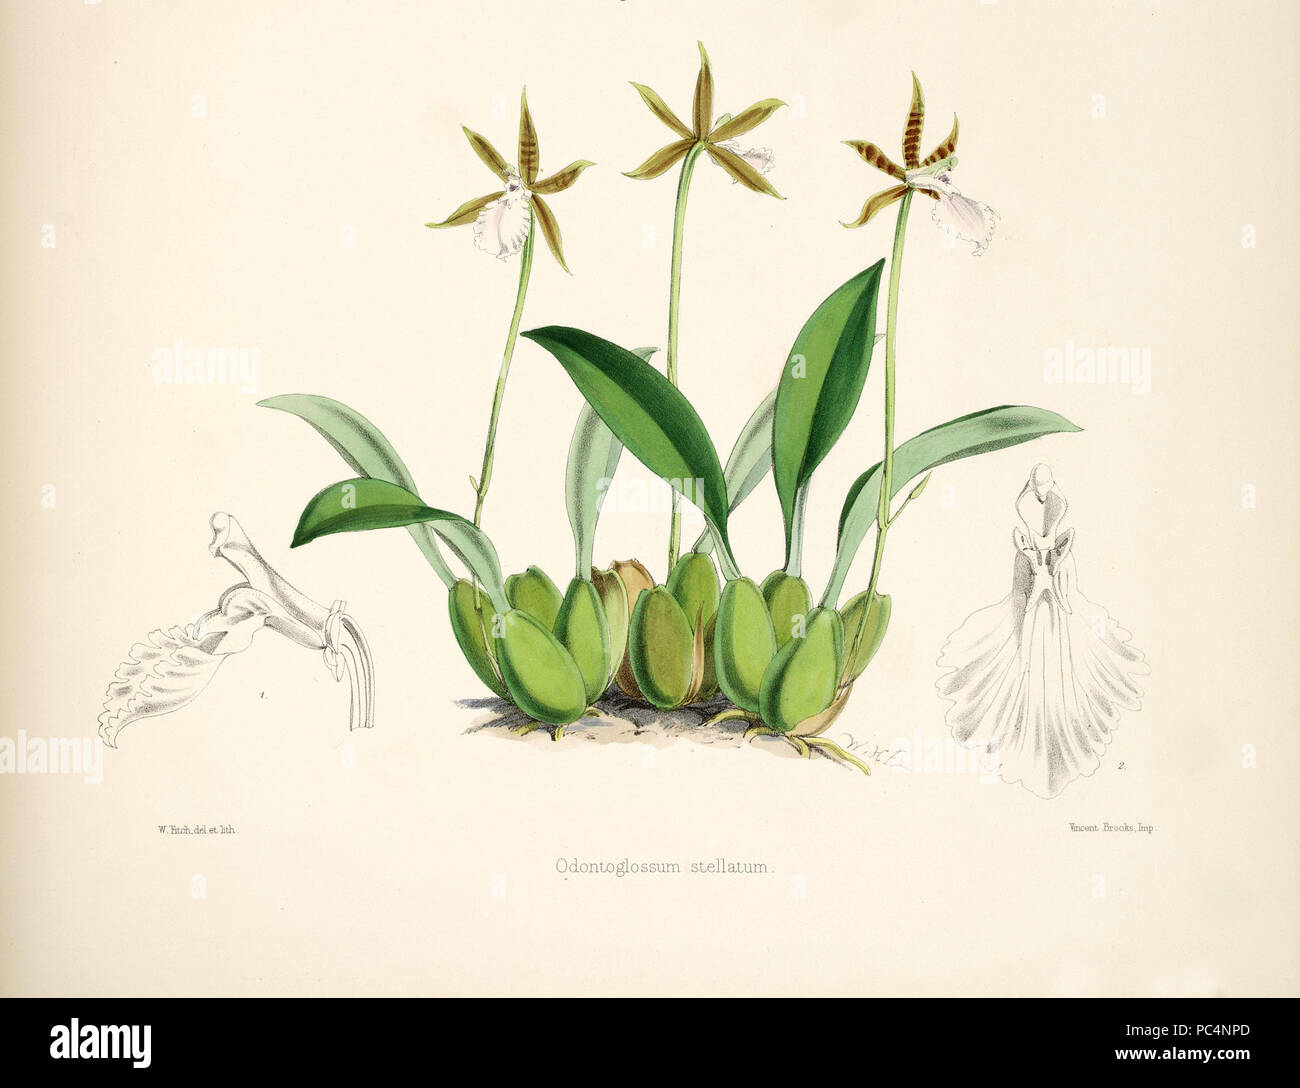 520 Rhynchostele stellata (as Odontoglossum stellatum) - pl. 13, lower fig. - Bateman, Monogr.Odont Stock Photo